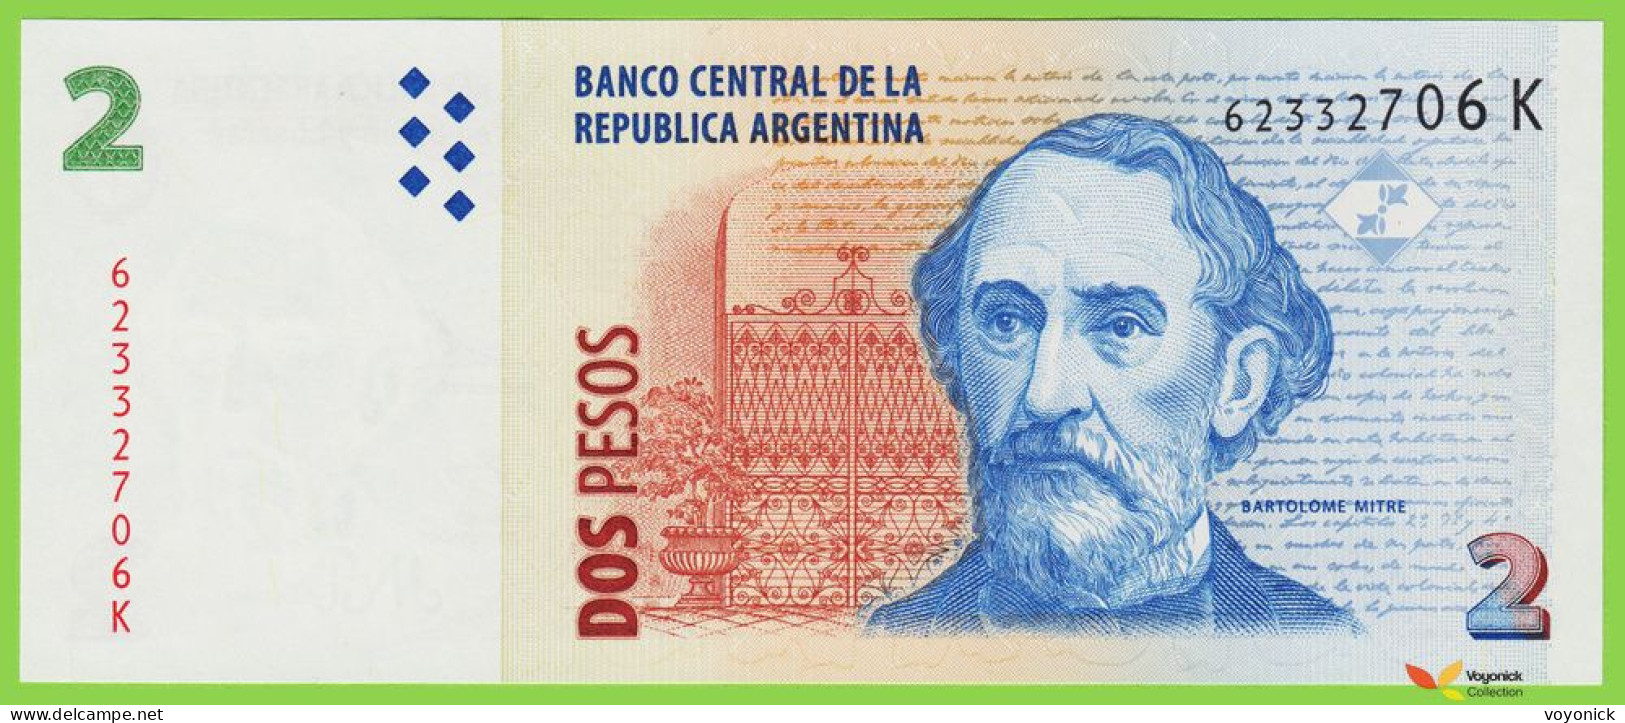 Voyo ARGENTINA 2 Pesos ND/2010 P352(6) EC761c B405g K UNC - Argentina